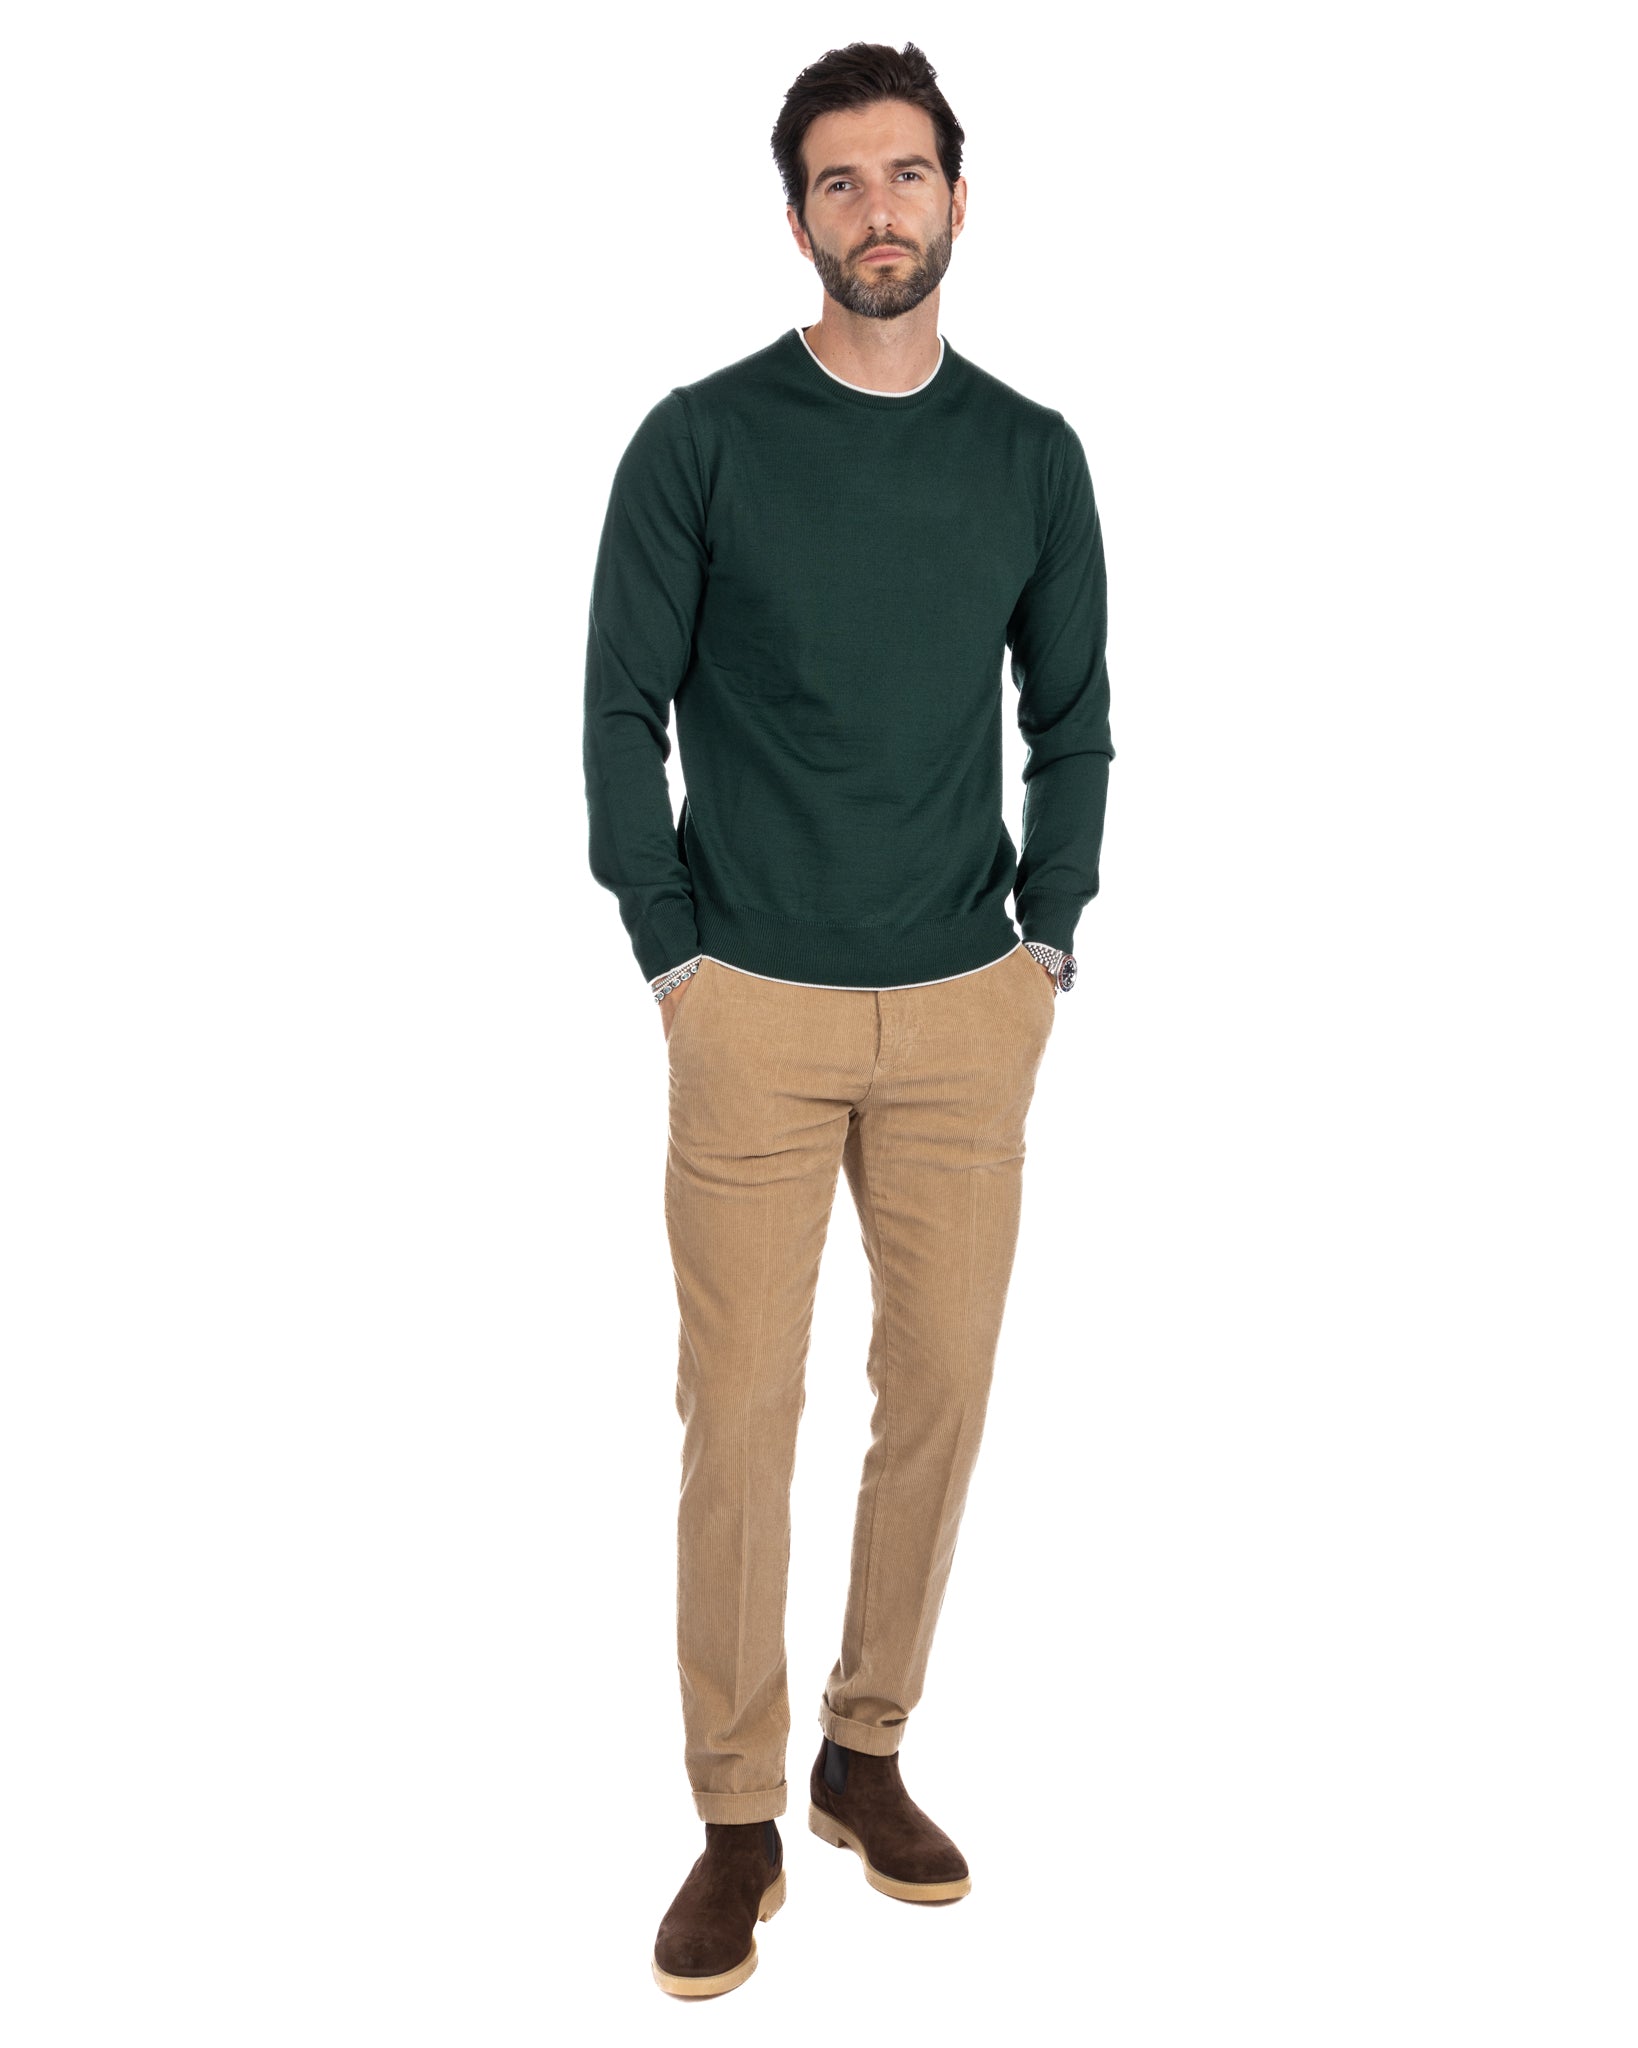 Seve - green sweater with cream edge